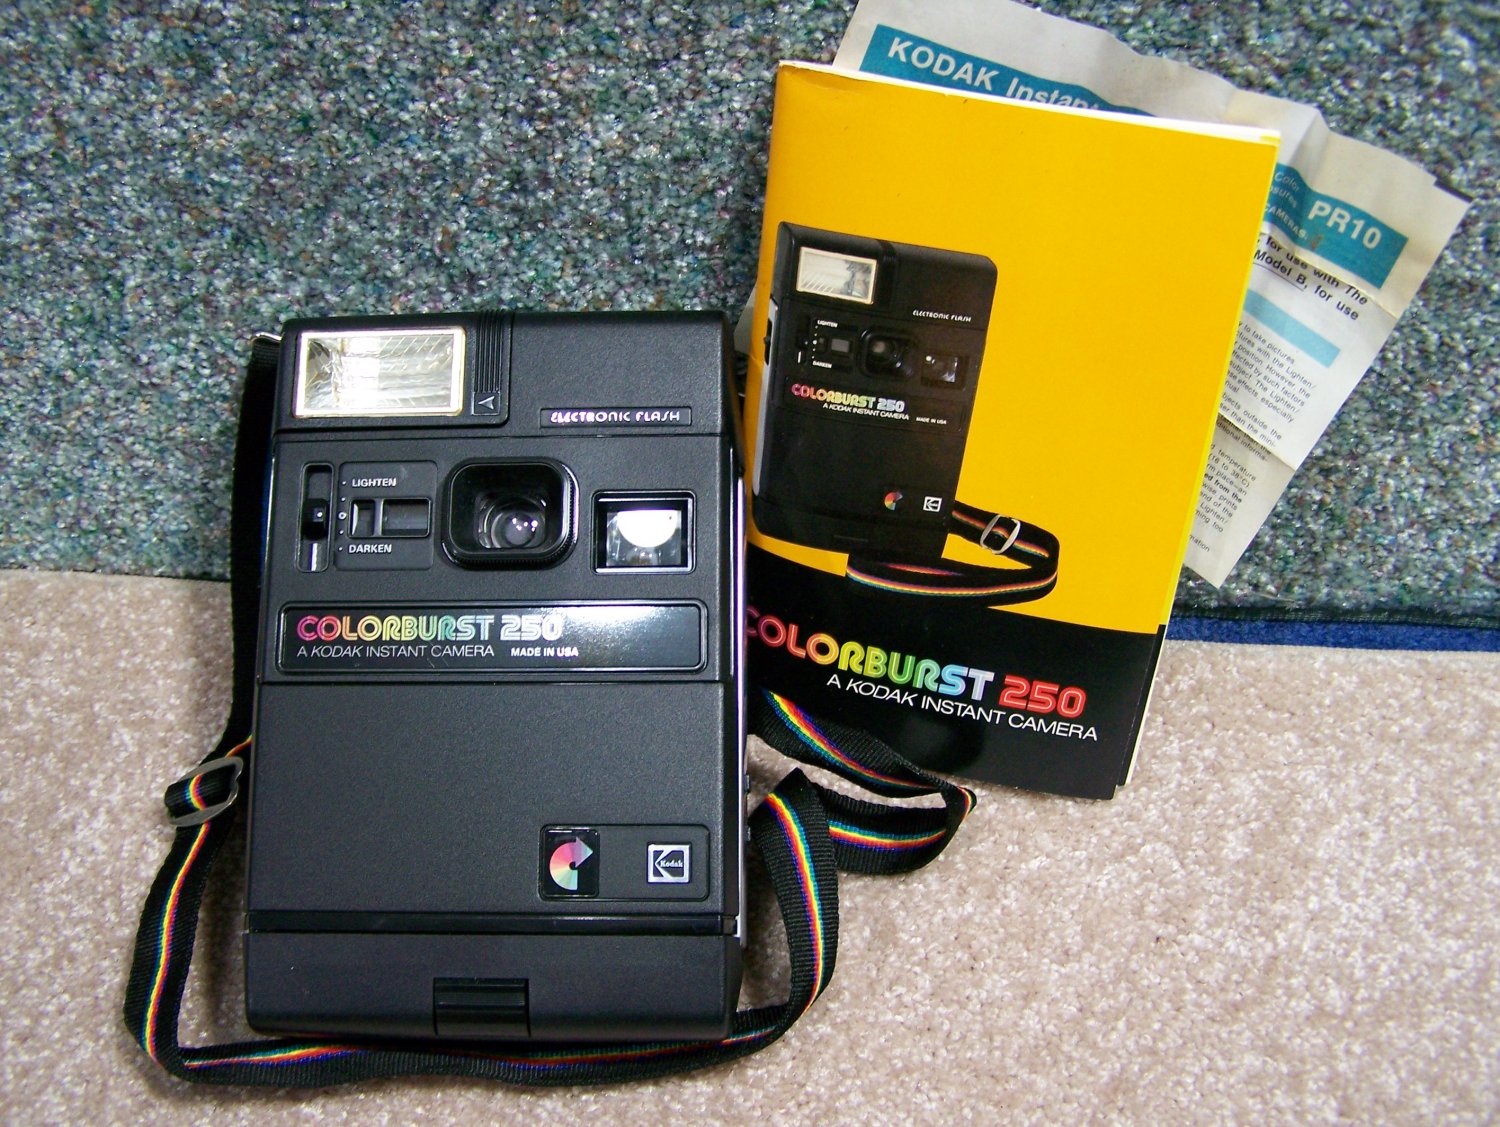 Kodak Colorburst 250 camera